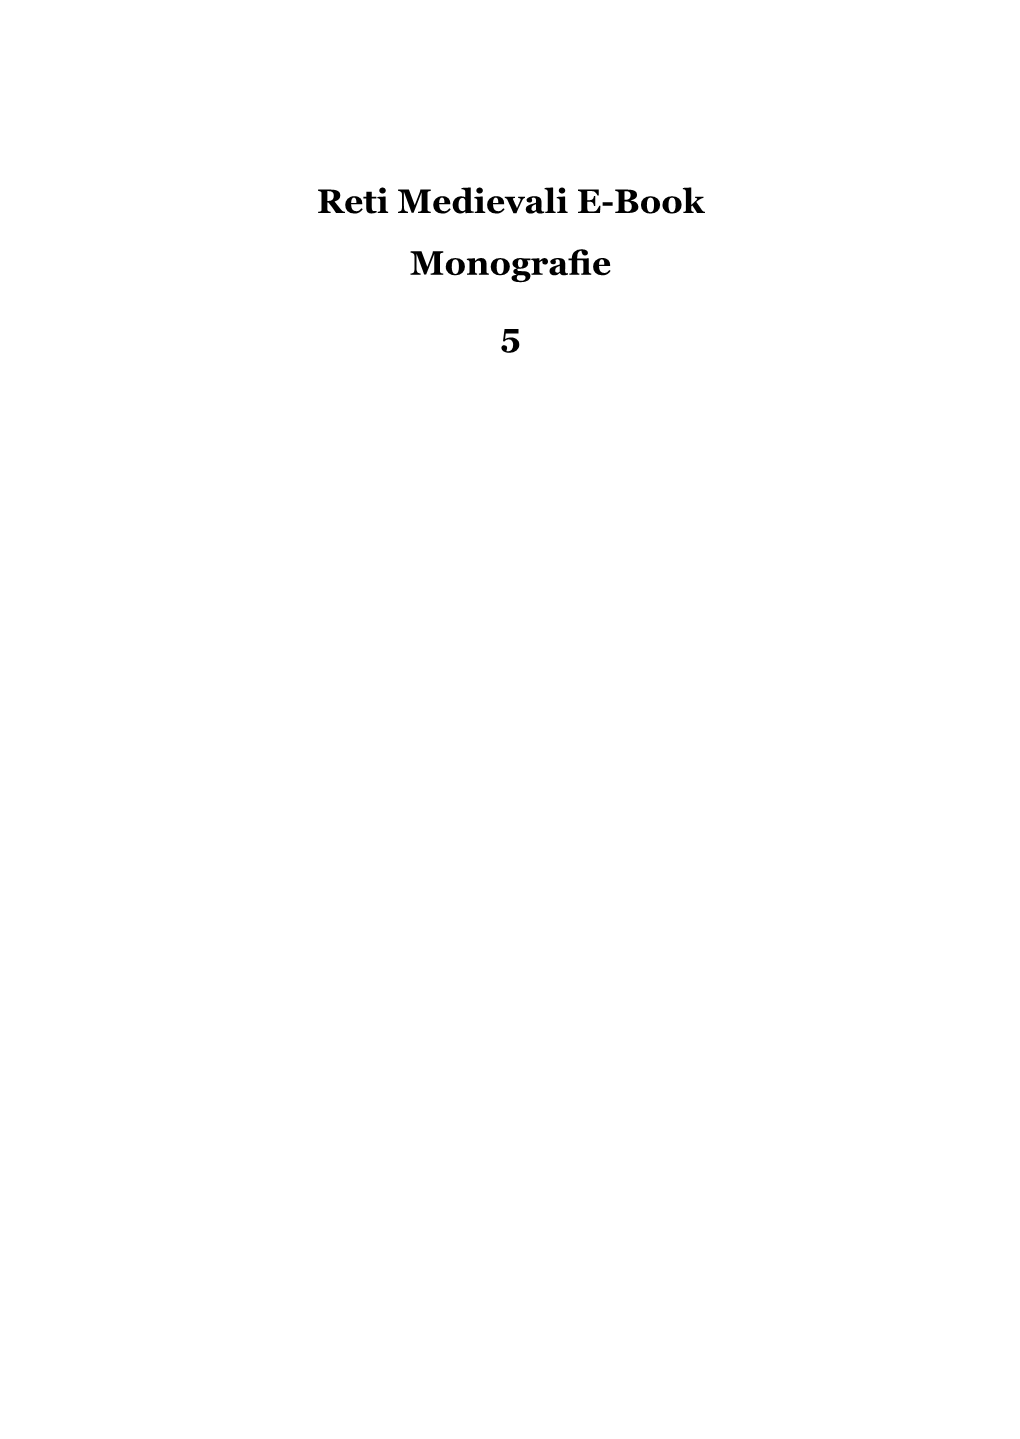 Reti Medievali E-Book Monografie 5